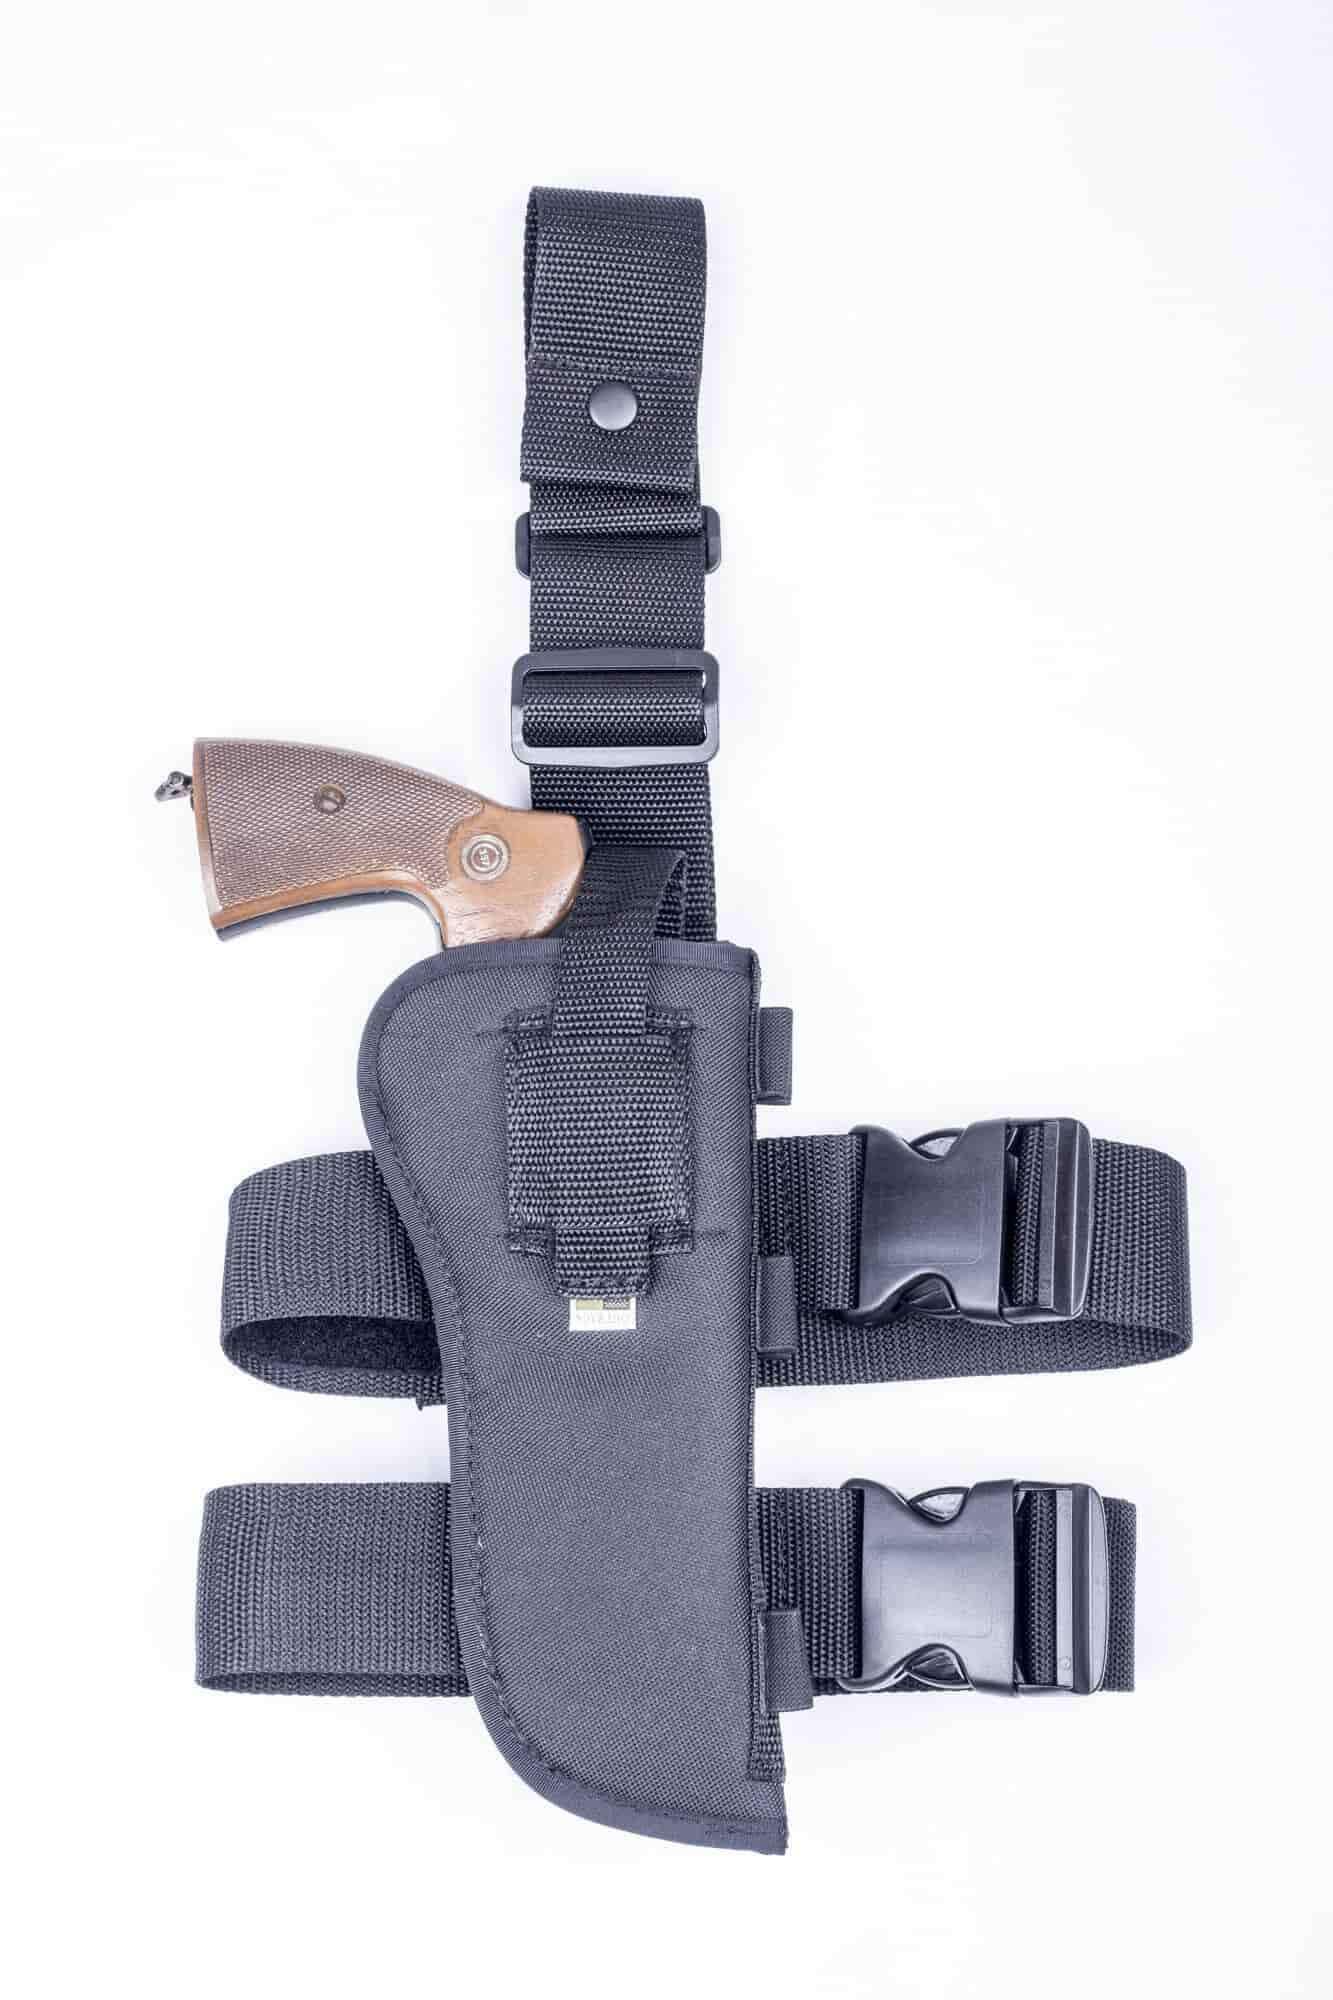 Leg Pistol Nylon Holster Fast Release Strap With Adjustable